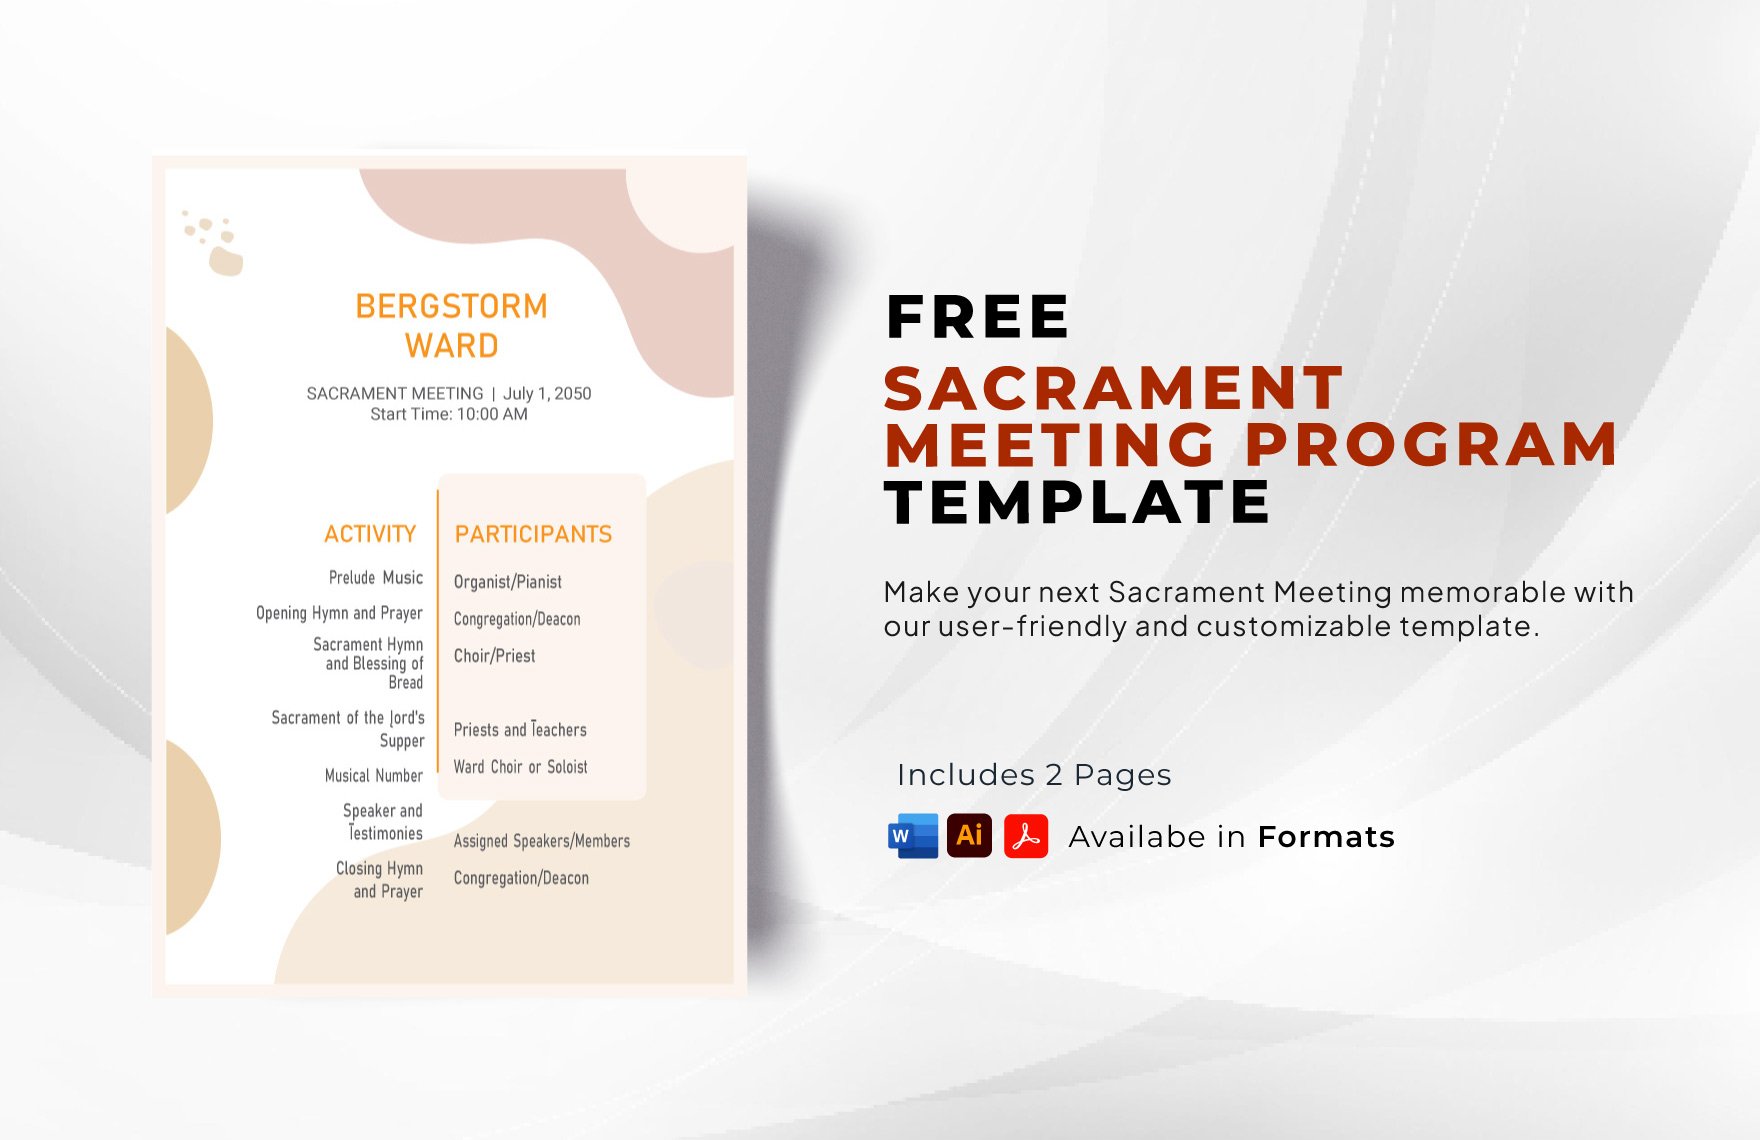 Free Sacrament Meeting Program Template